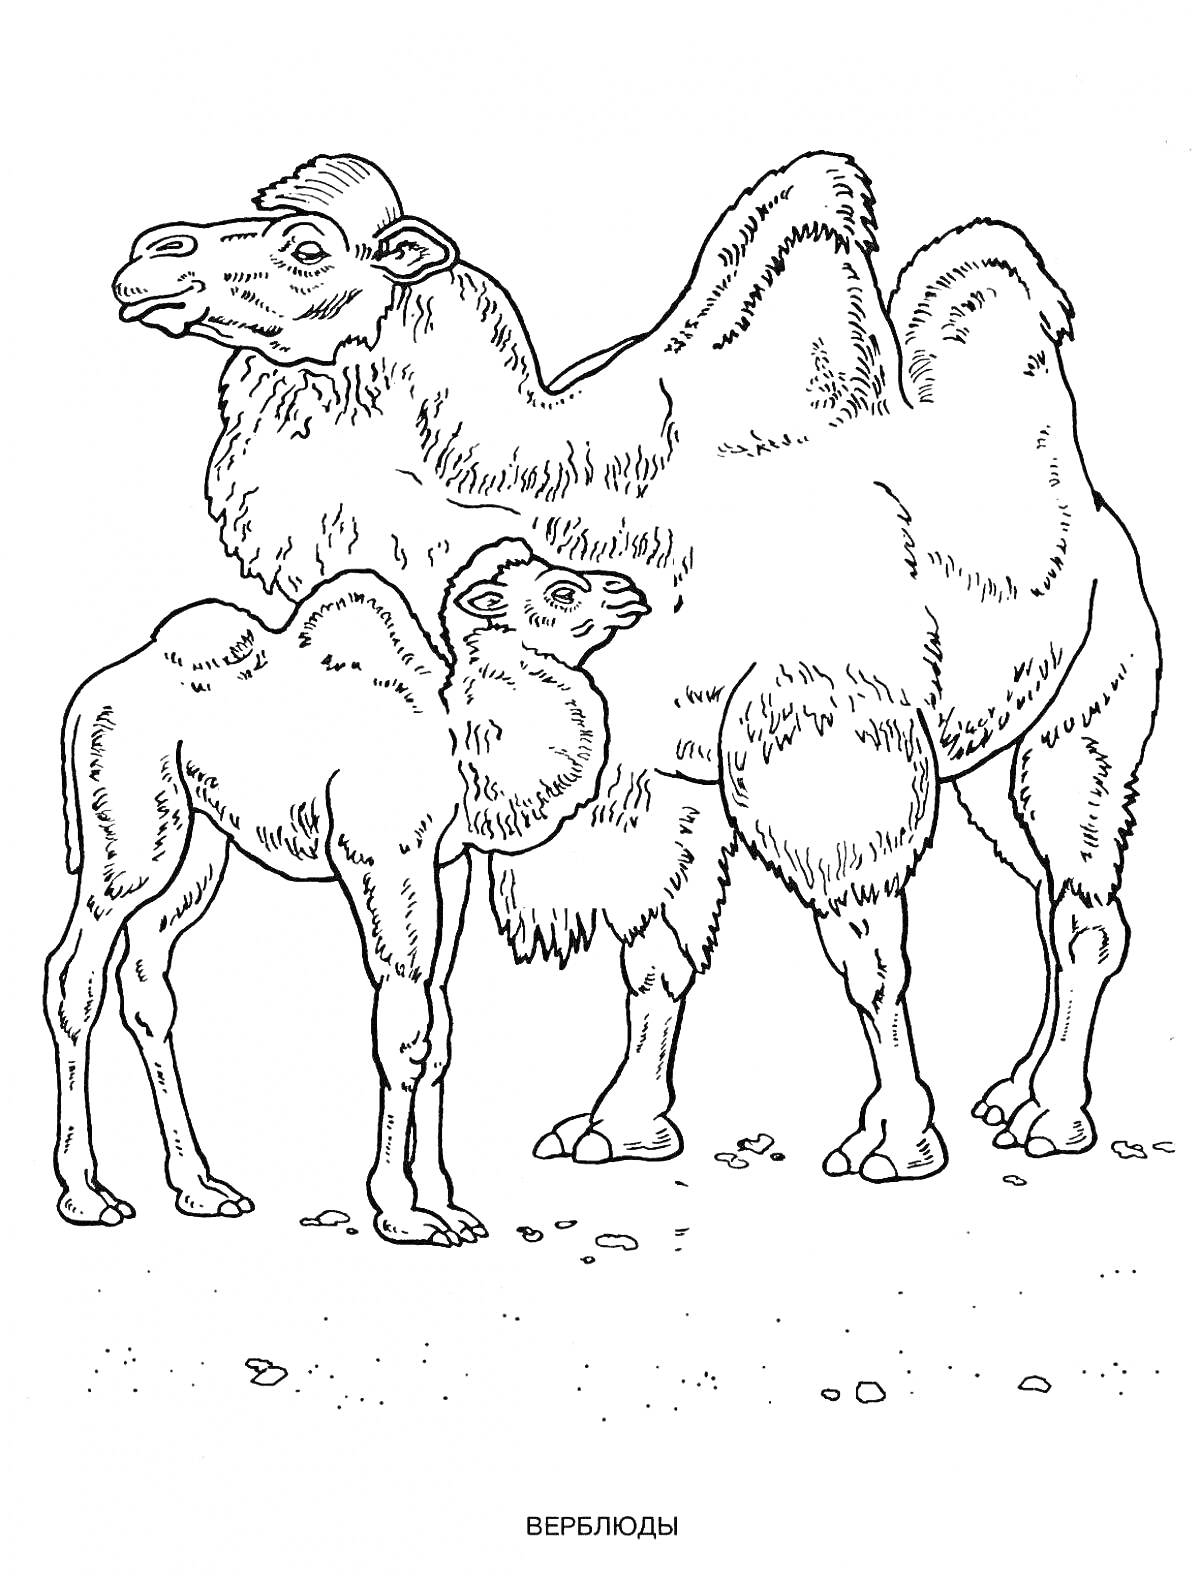 Два верблюда на фоне камней